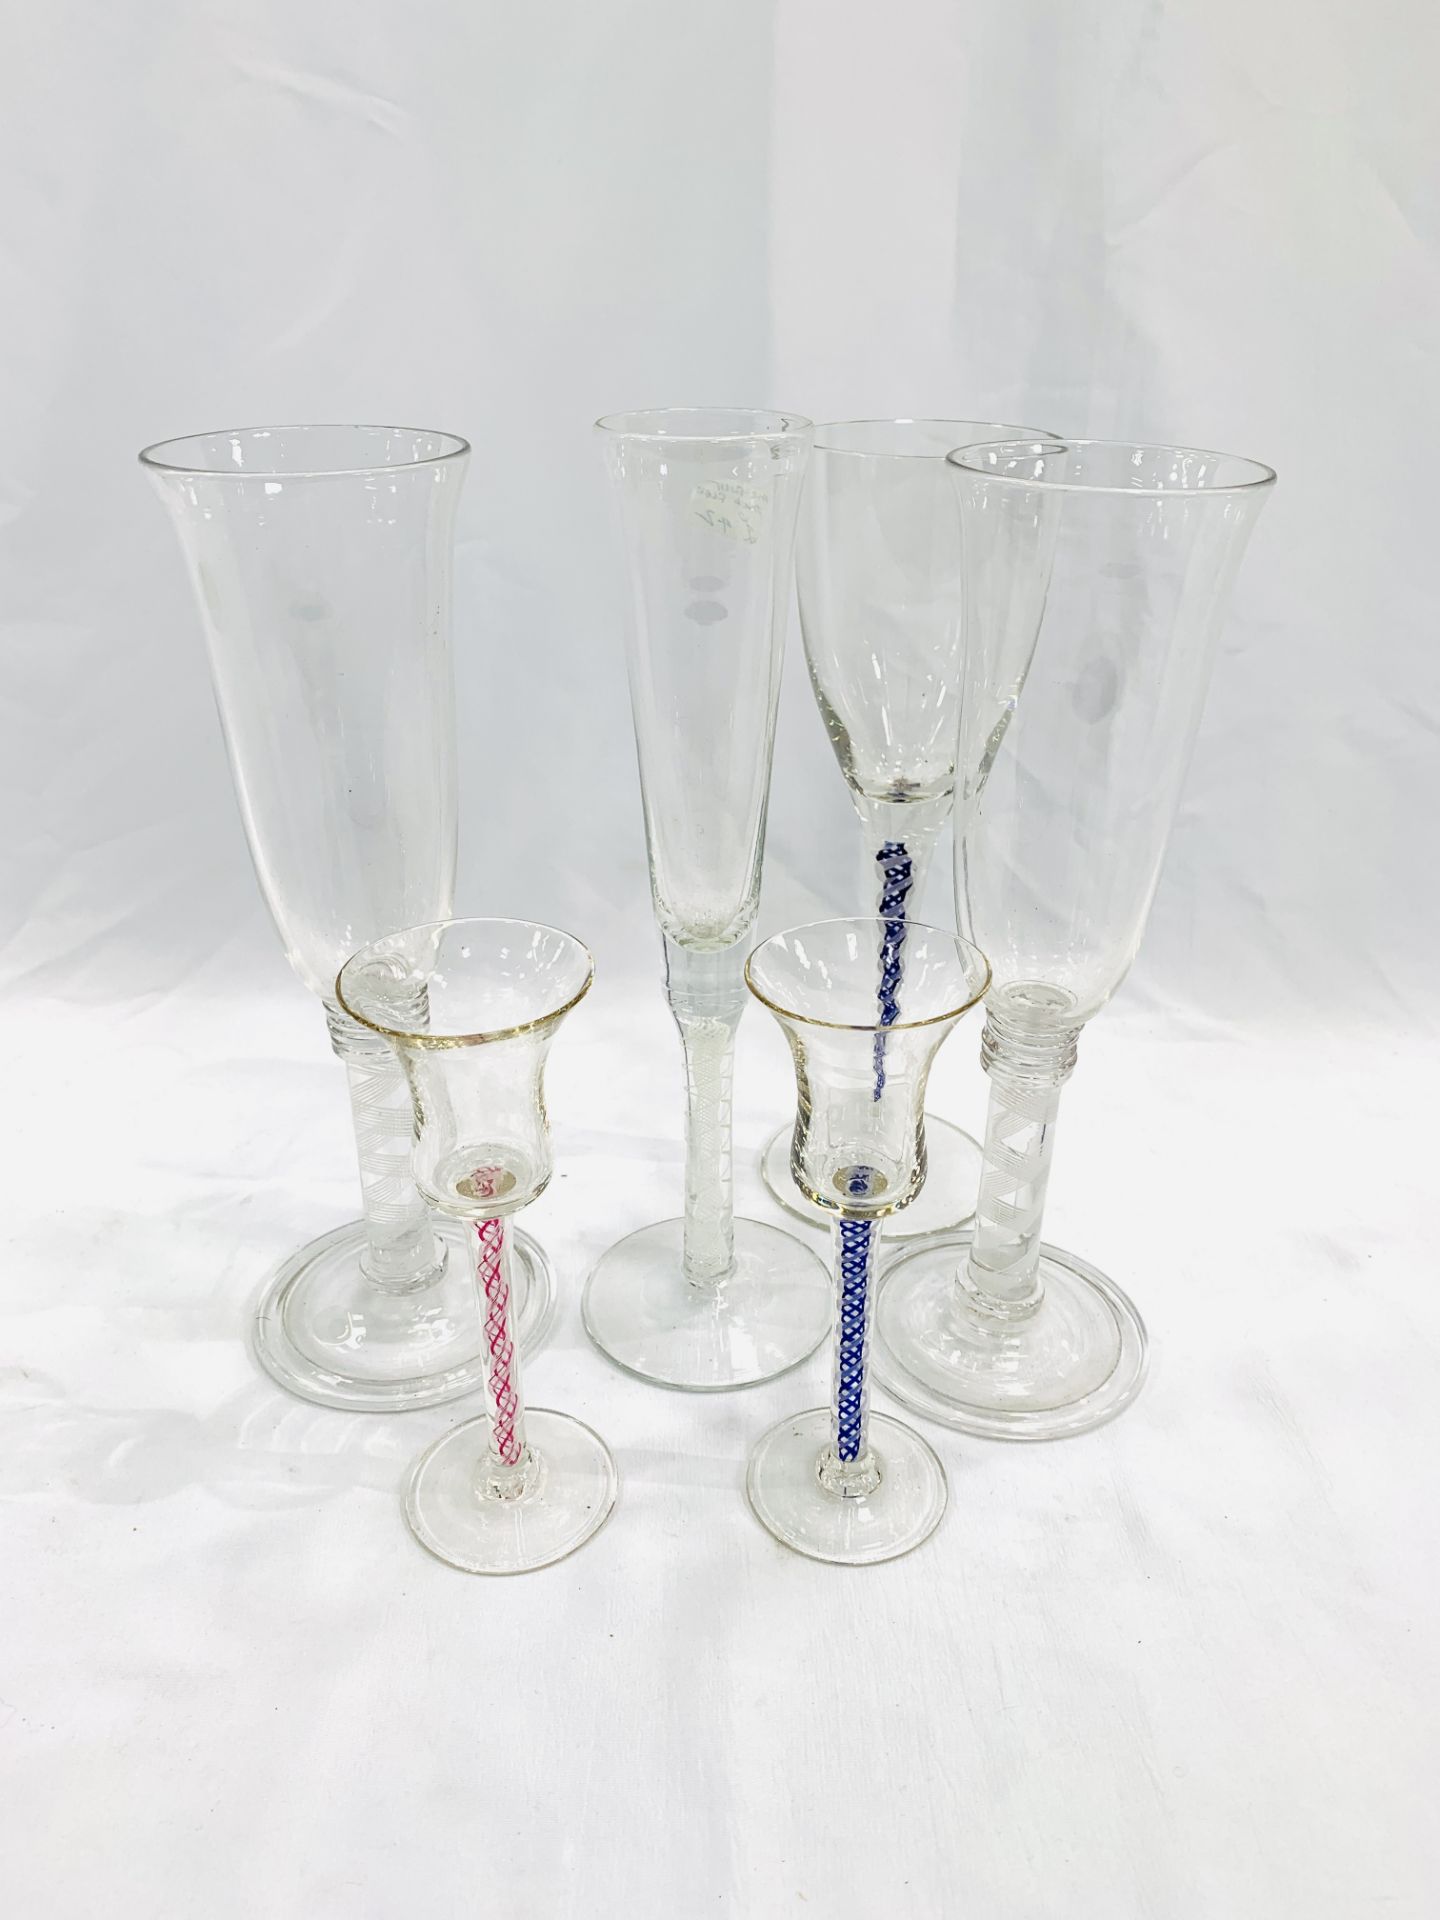 Six wine glasses with air twist stems